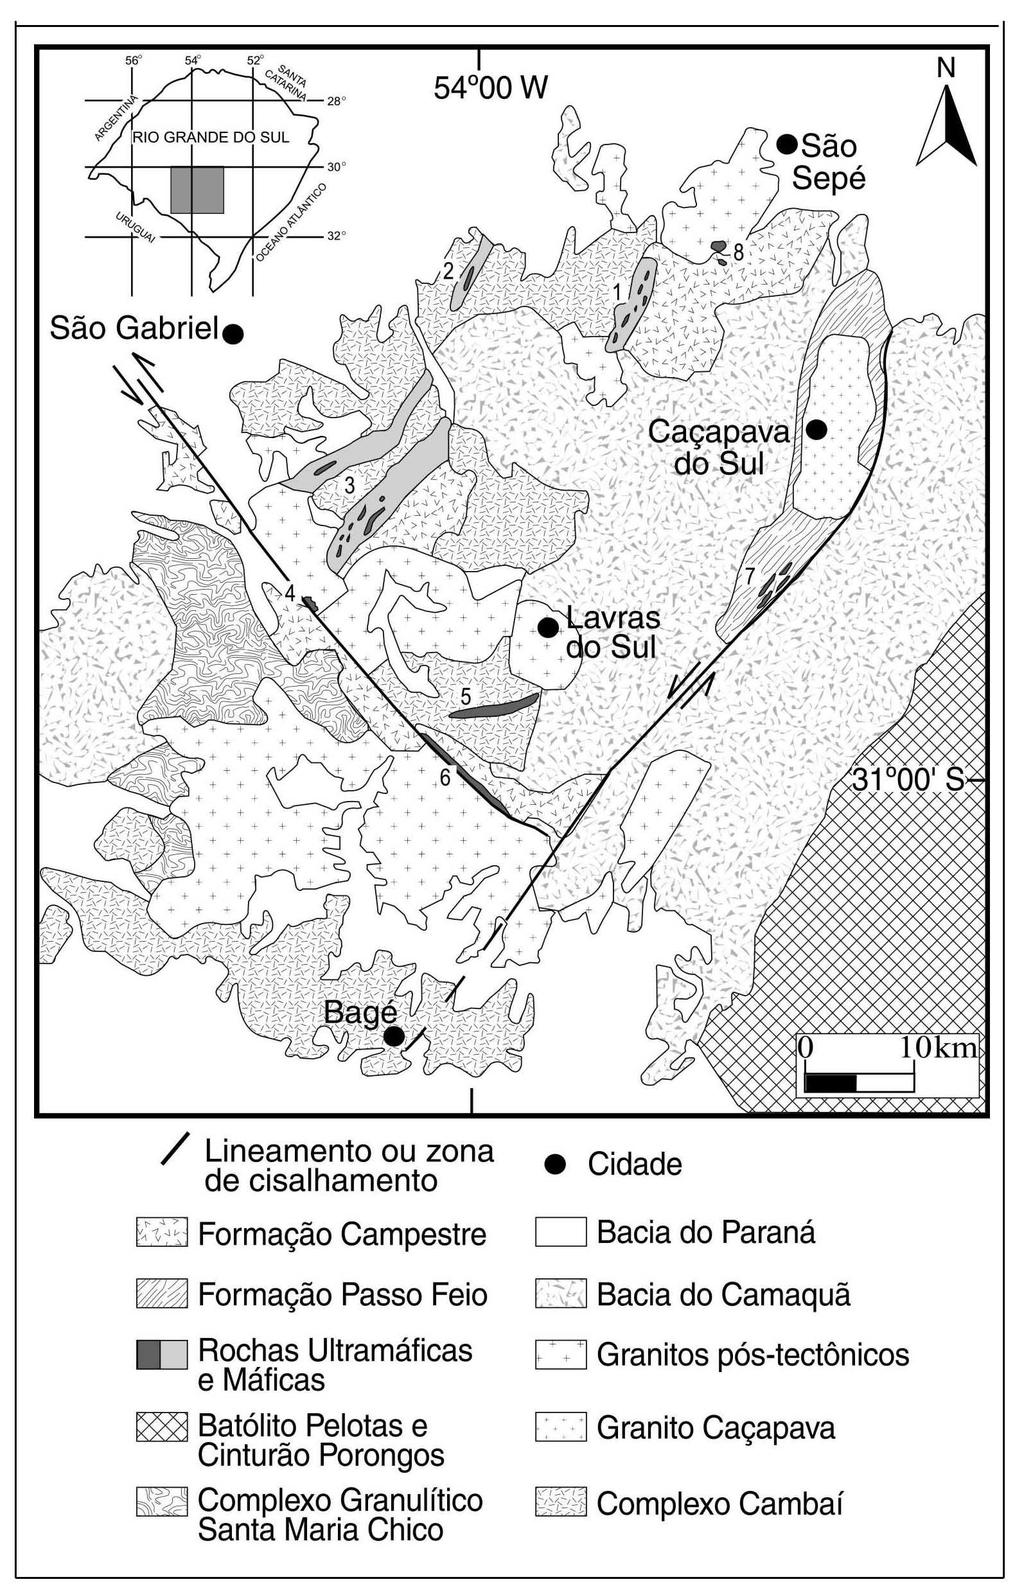 Figura 1 - Contexto geológico regional (Bloco São Gabriel) das unidades máficas ultramáficas.